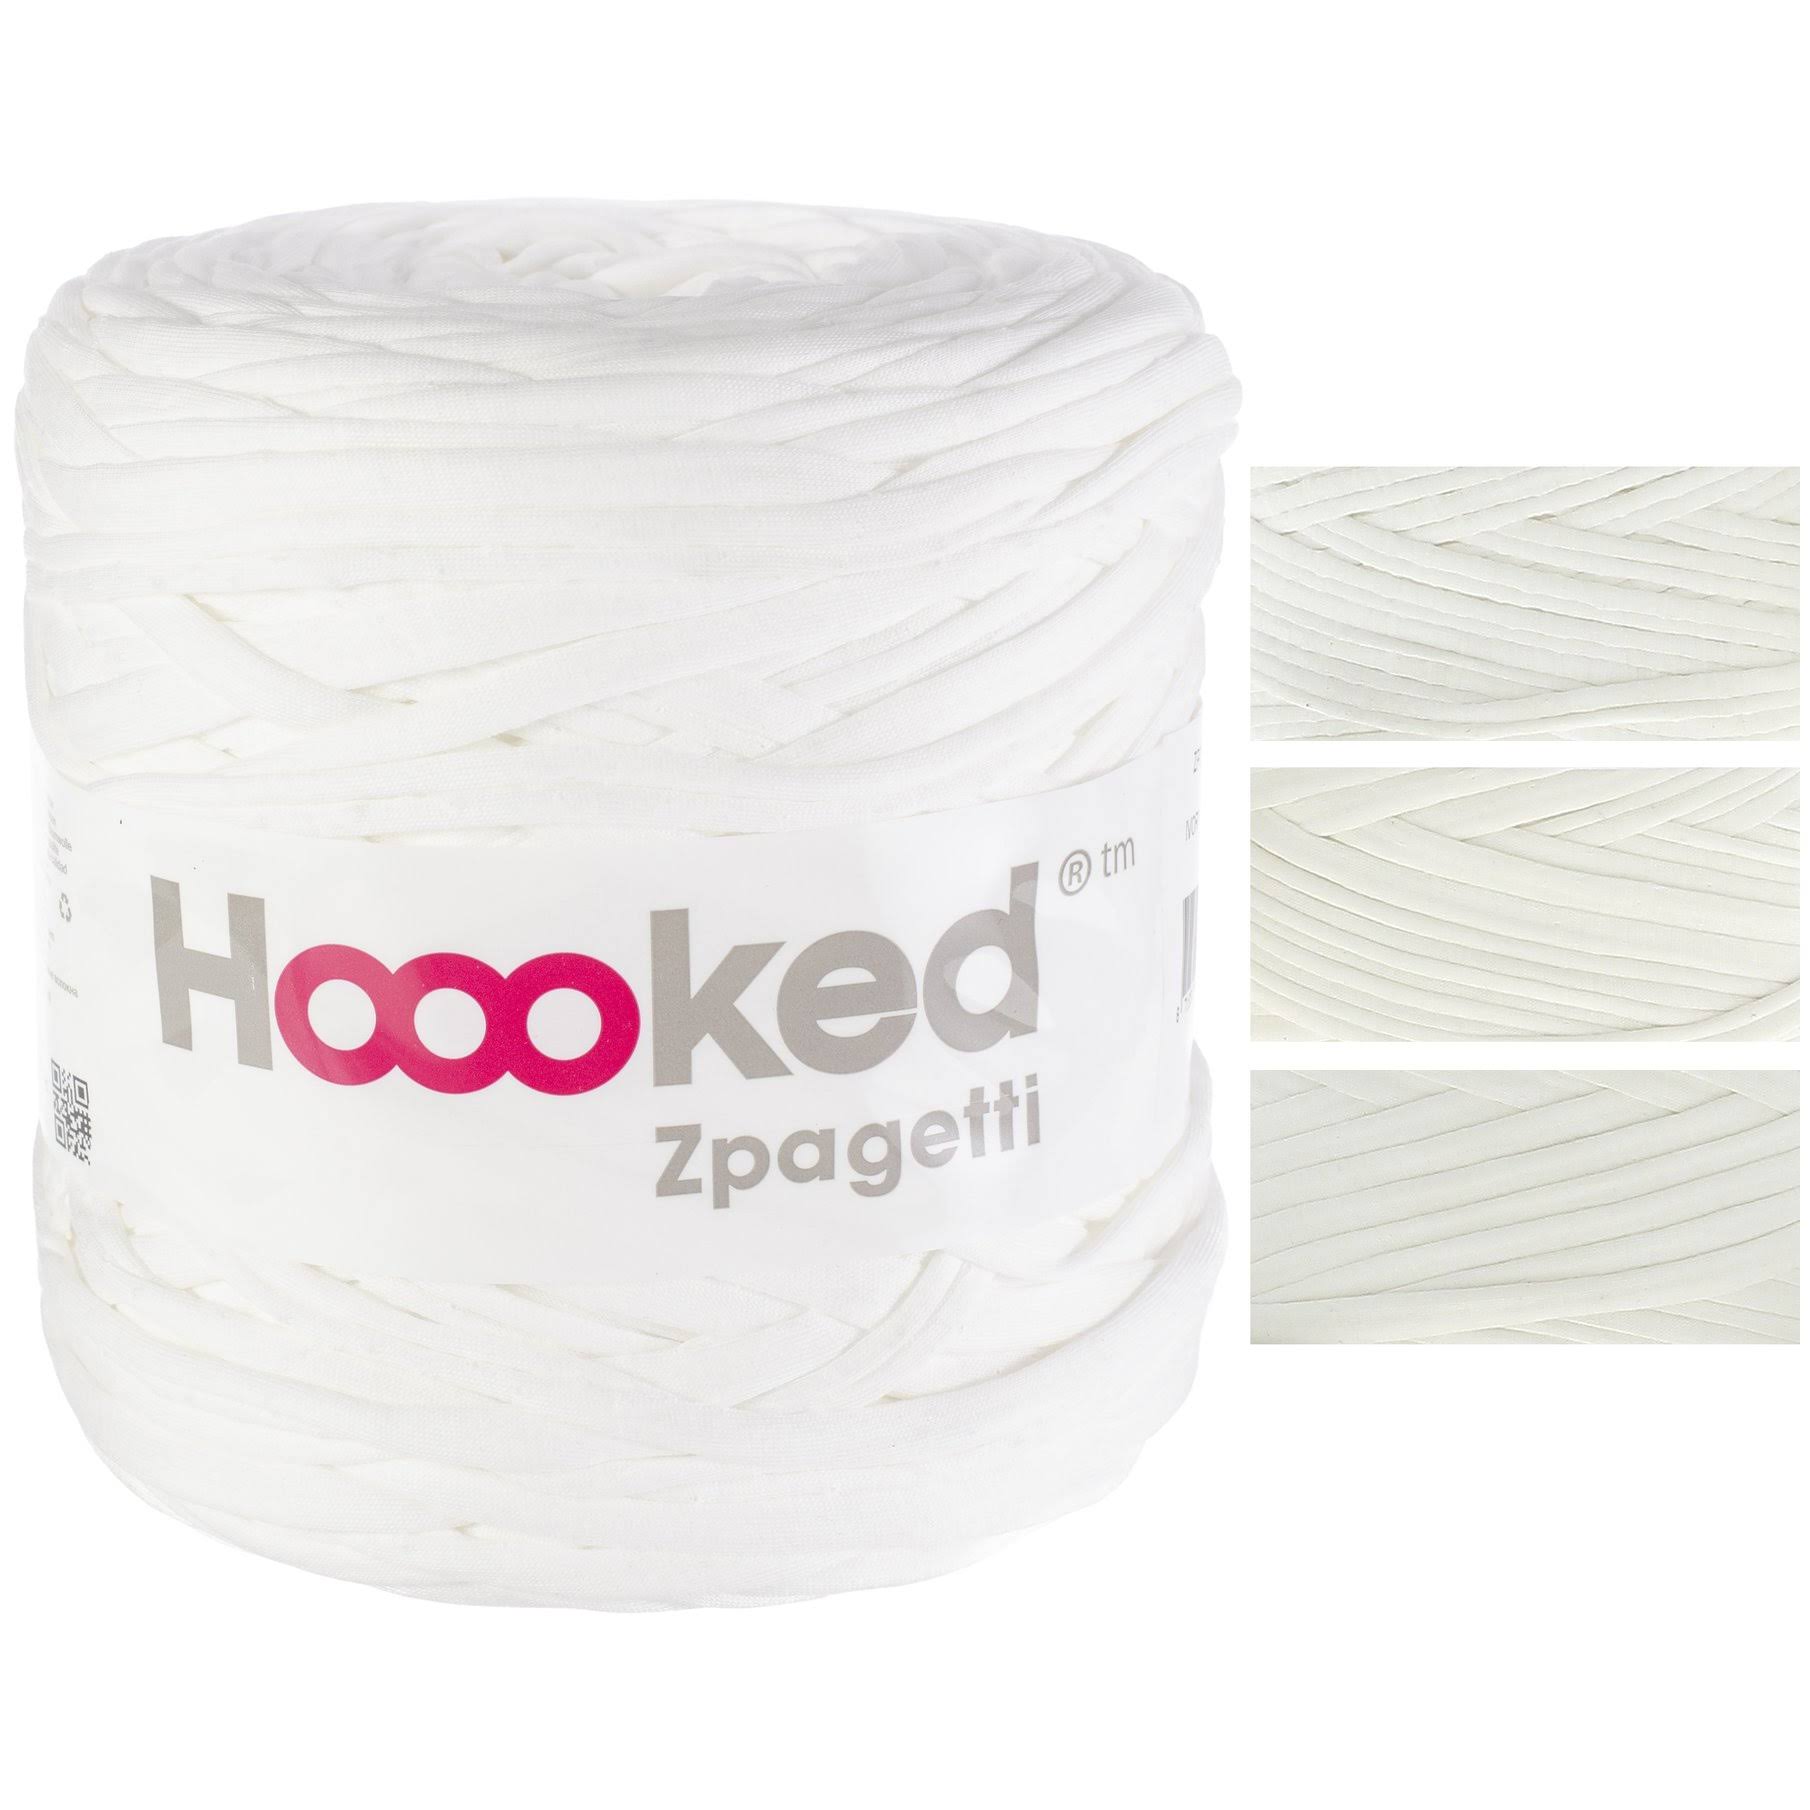 Hoooked Zpagetti Yarn-Ivory White